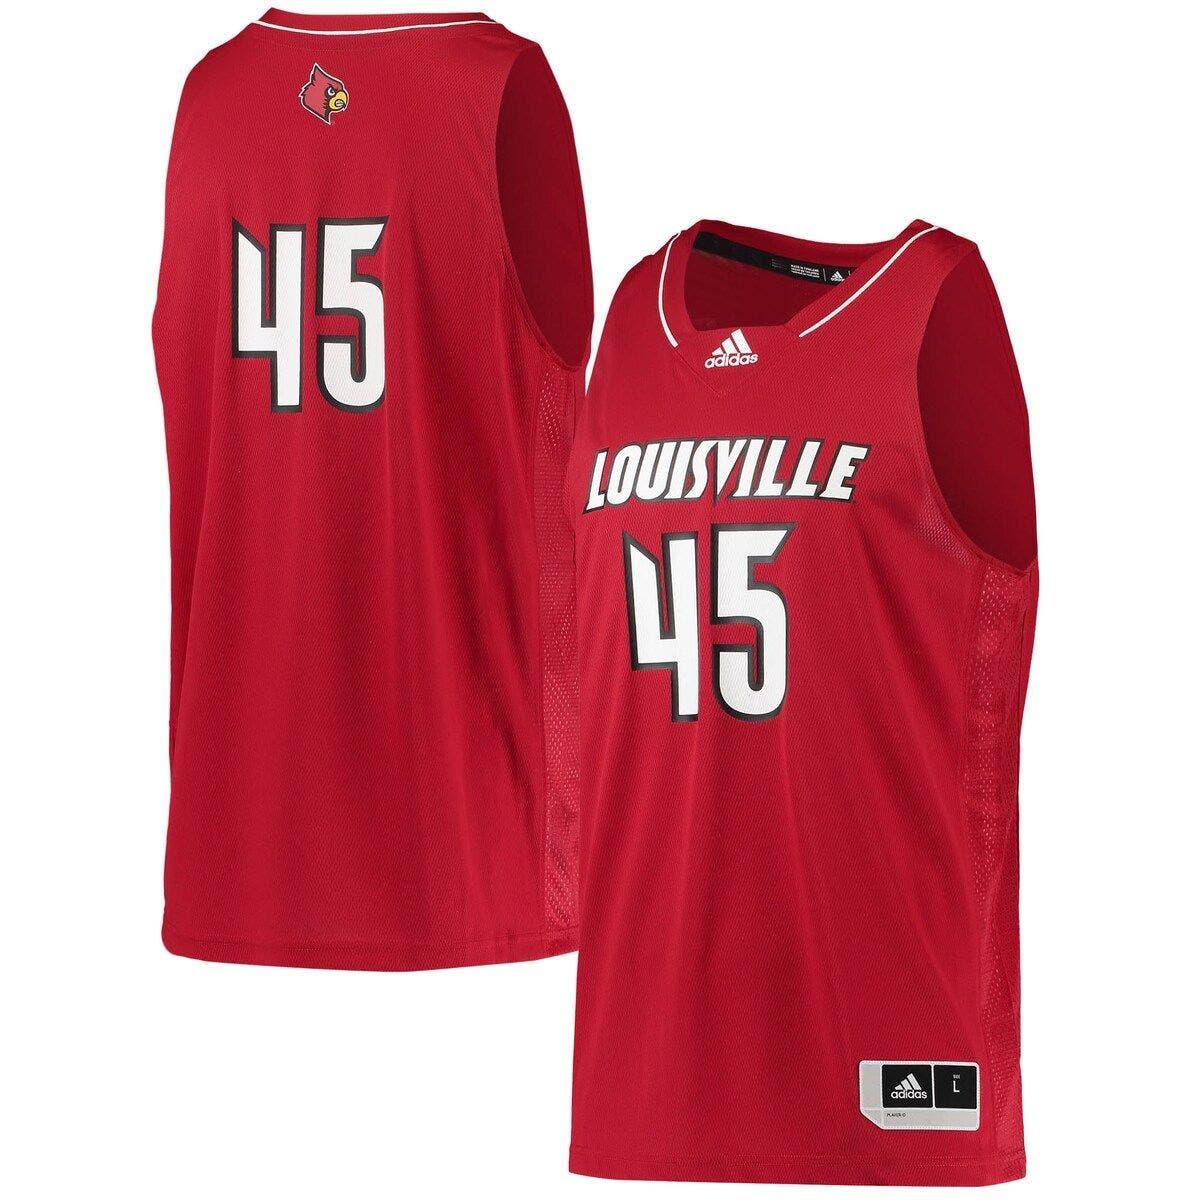 Louisville Cardinals adidas Baseball Coaches Full-Snap Jacket - Red